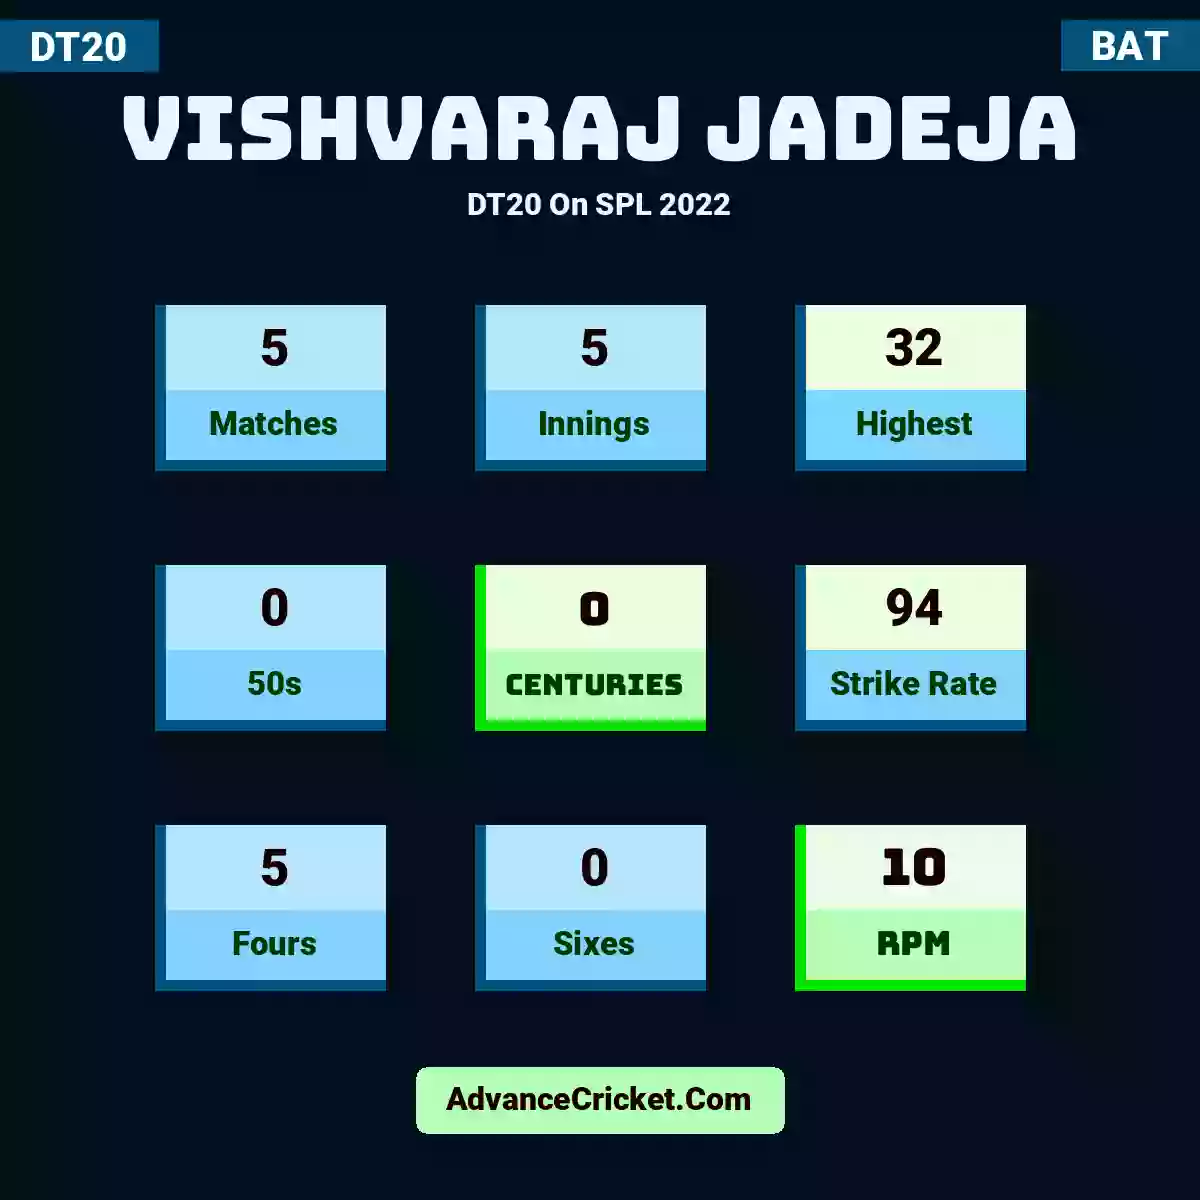 Vishvaraj Jadeja DT20  On SPL 2022, Vishvaraj Jadeja played 5 matches, scored 32 runs as highest, 0 half-centuries, and 0 centuries, with a strike rate of 94. V.Jadeja hit 5 fours and 0 sixes, with an RPM of 10.